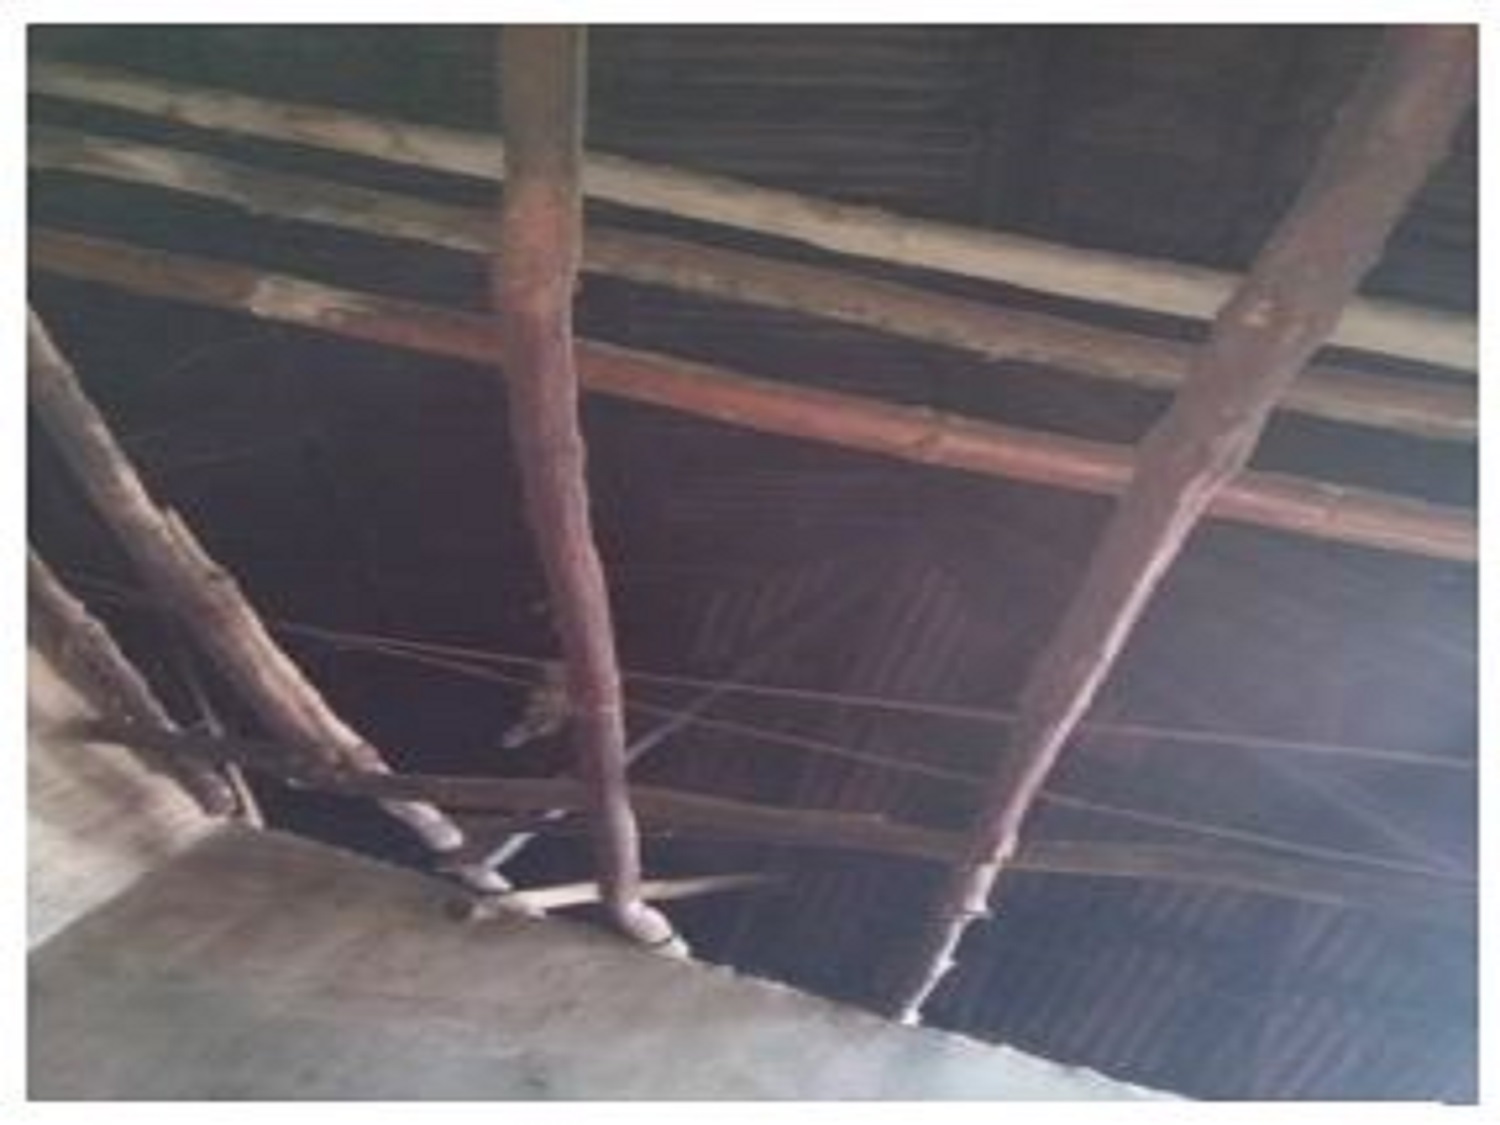 Awotiku Family House - Roof loft and storage space